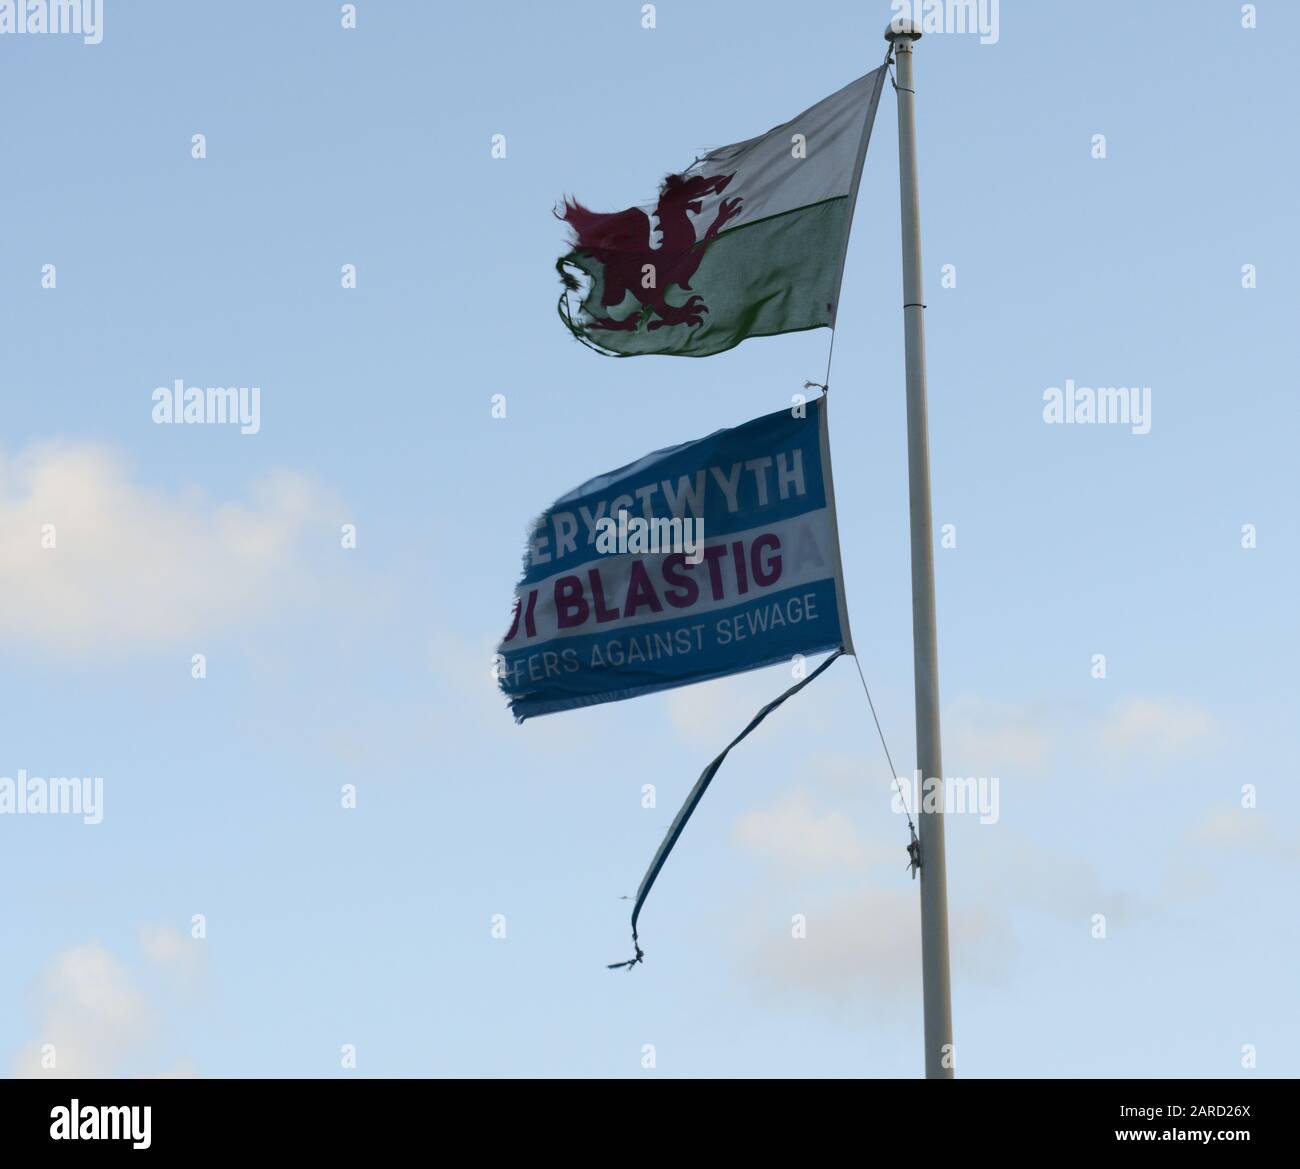 Aberystwyth Ceredigion Wales UK January 17 2019: Tatty and torn Welsh Dragon flag and Welsh Aberystwyth Plastic Free (Di Blastig) Stock Photo